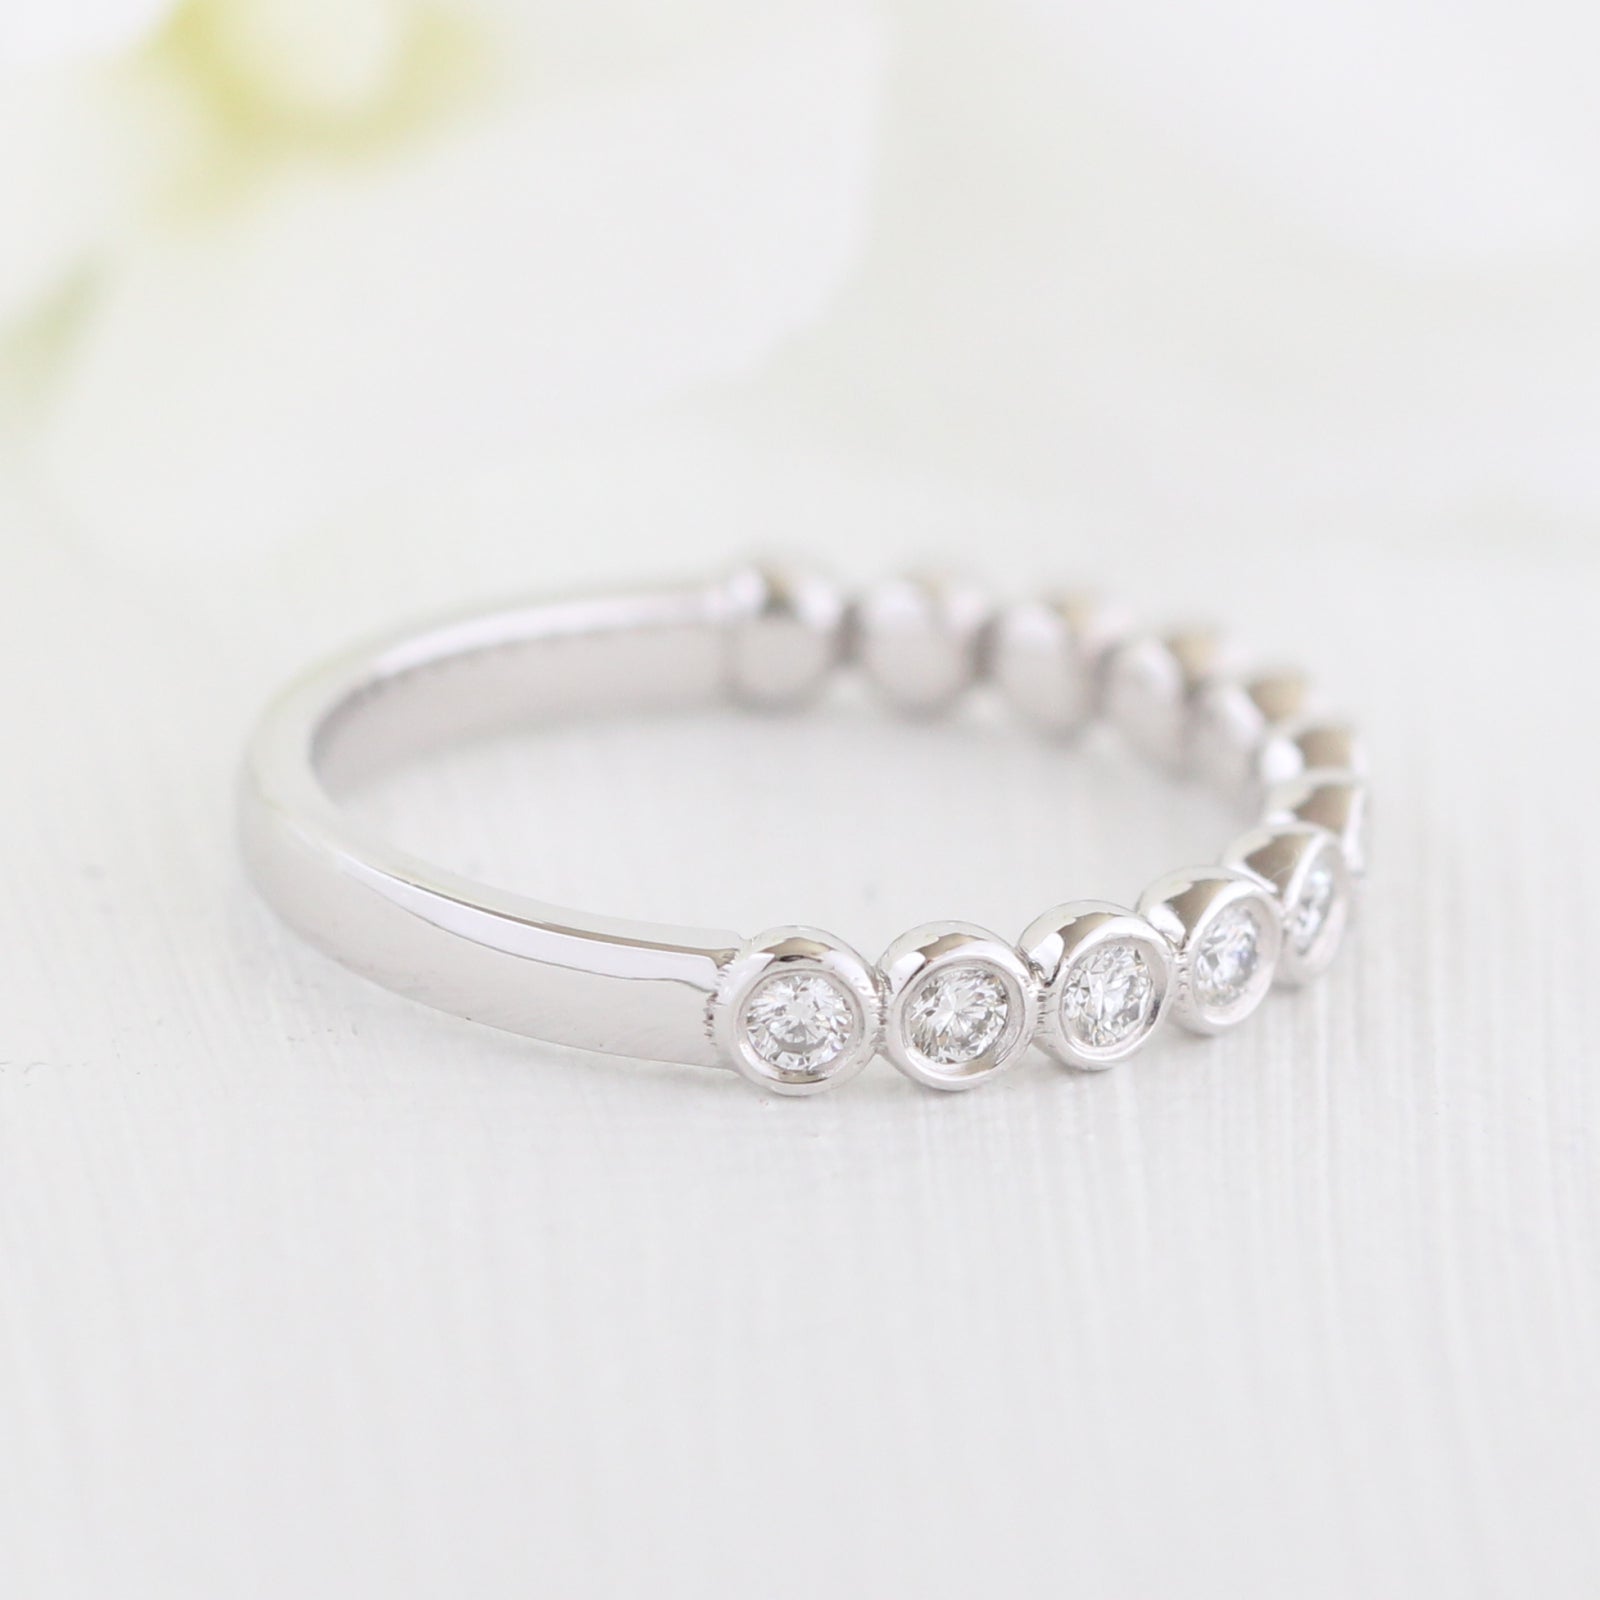 Bezel Set Diamond Wedding Ring in 14k White Gold Half Eternity Band, Size 6.5